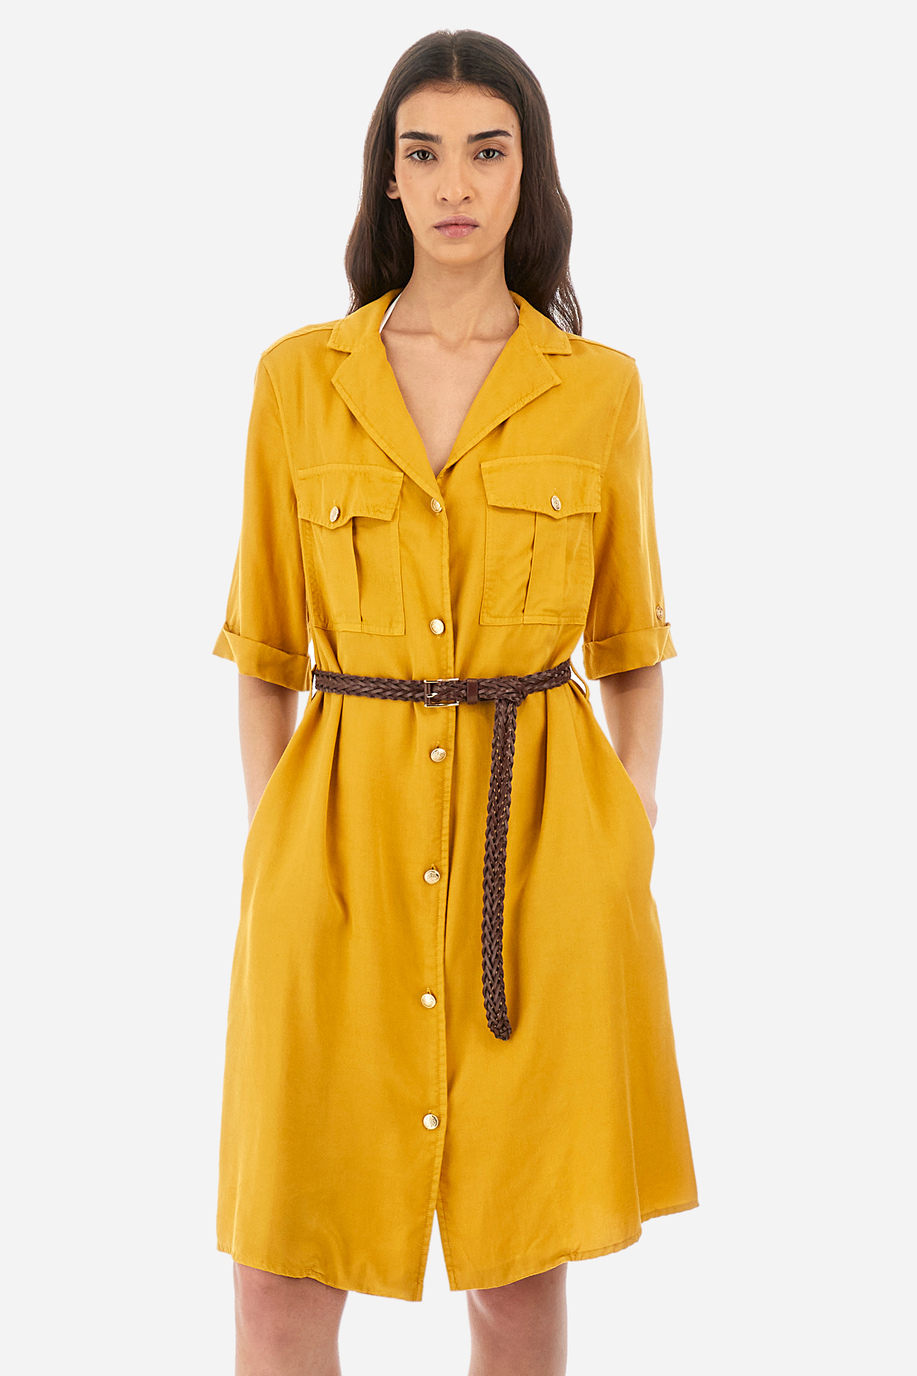 Robe à manches courtes en tencel - Yeruscha - Robes | La Martina - Official Online Shop